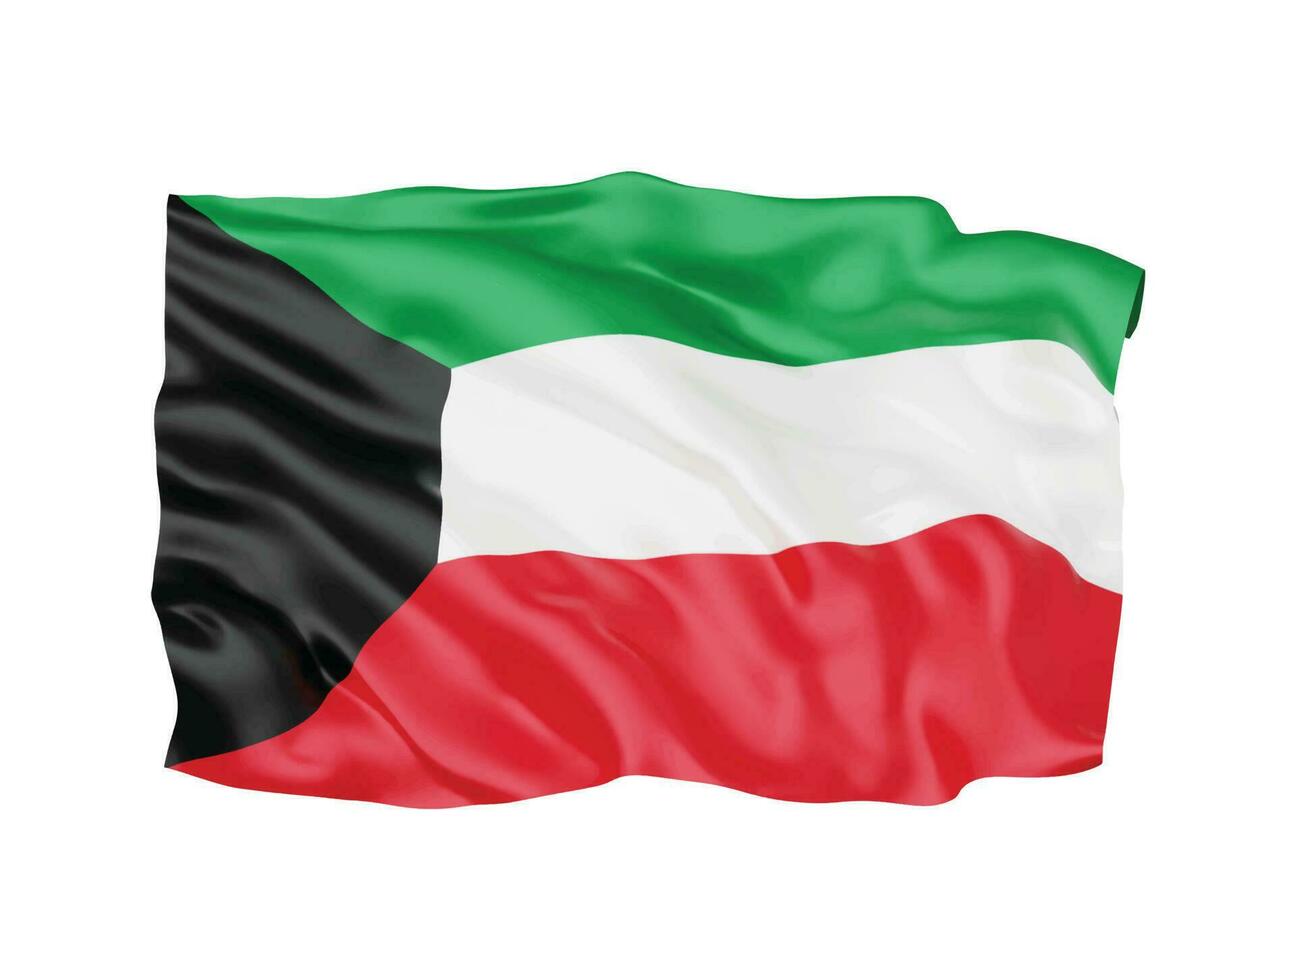 símbolo do sinal nacional da bandeira de kuwait 3d vetor